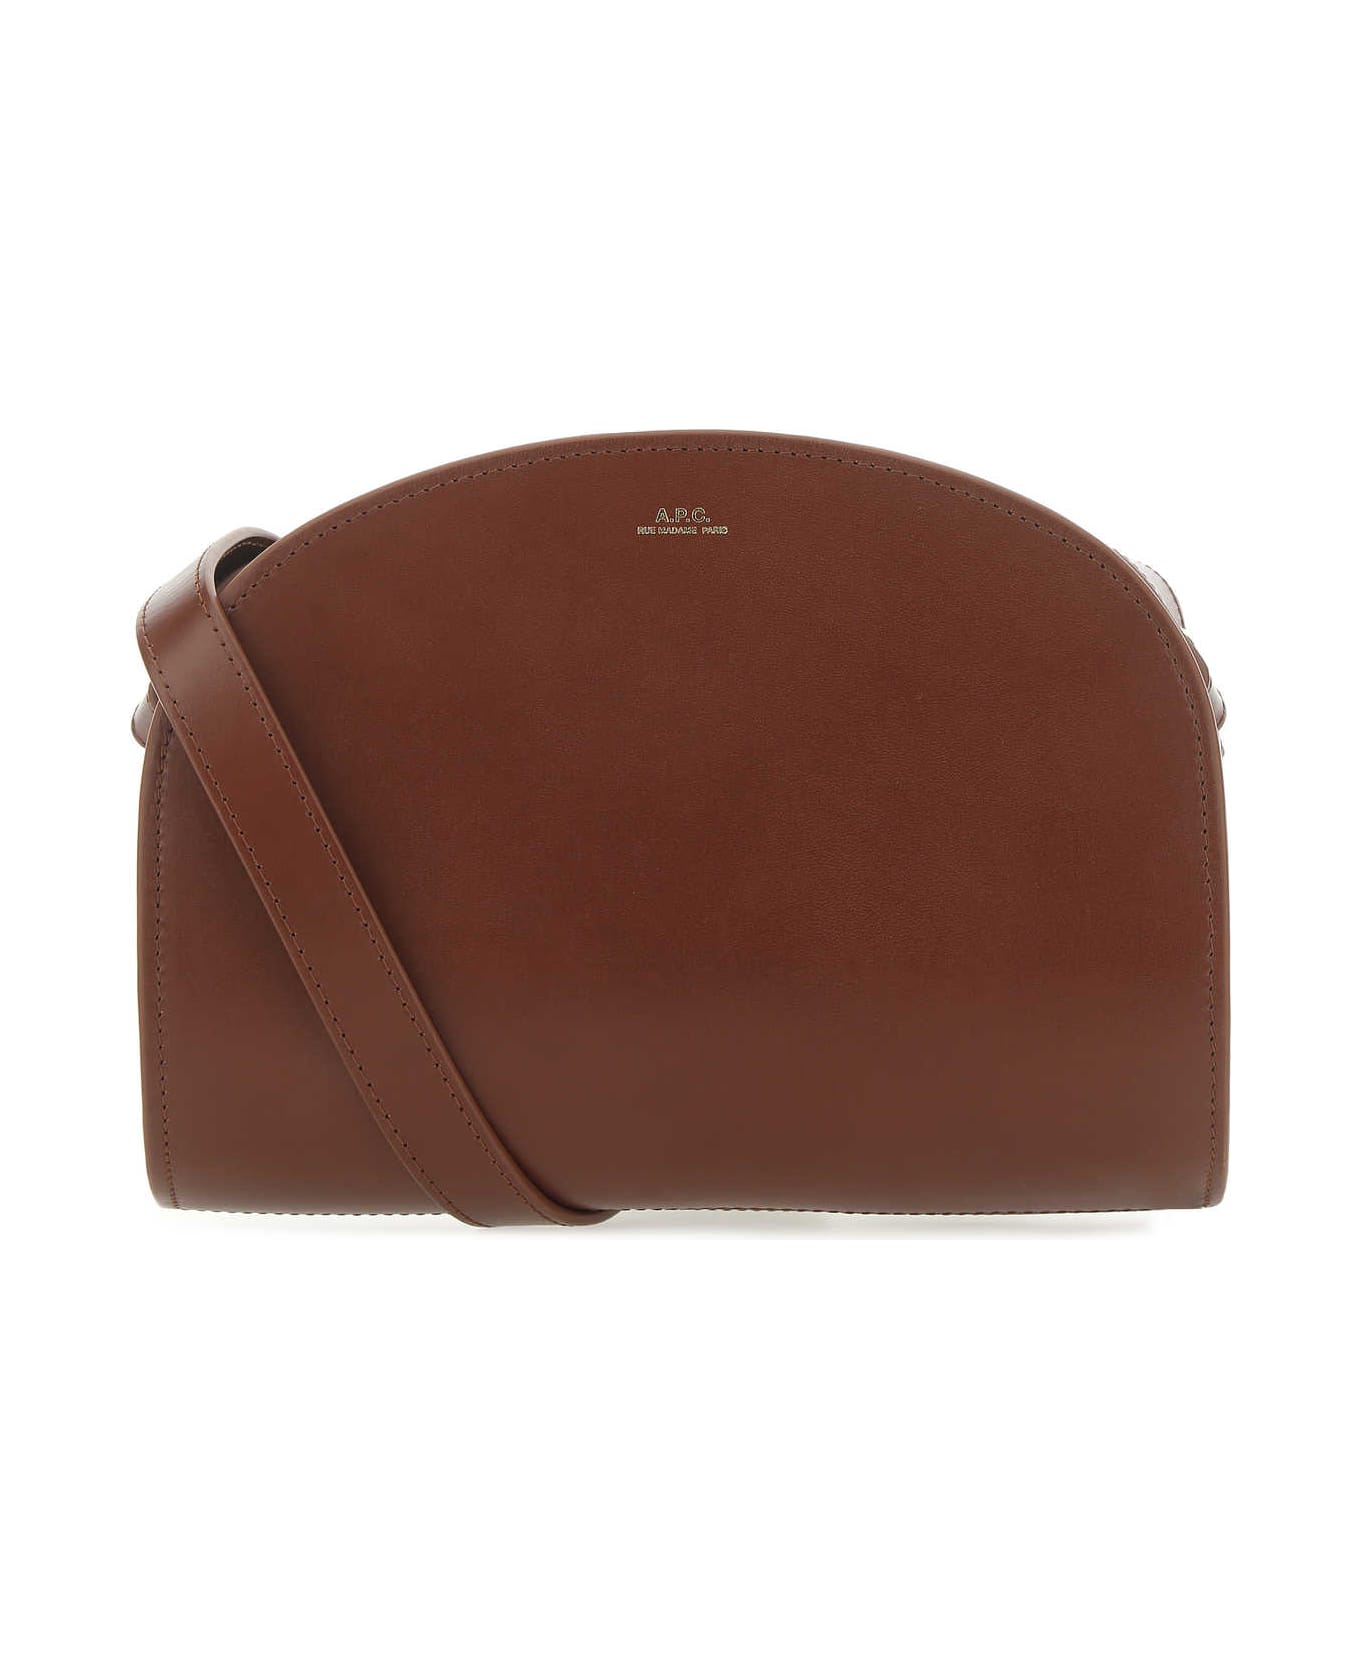 A.P.C. Brown Leather Demi Lune Shoulder Bag - CAD